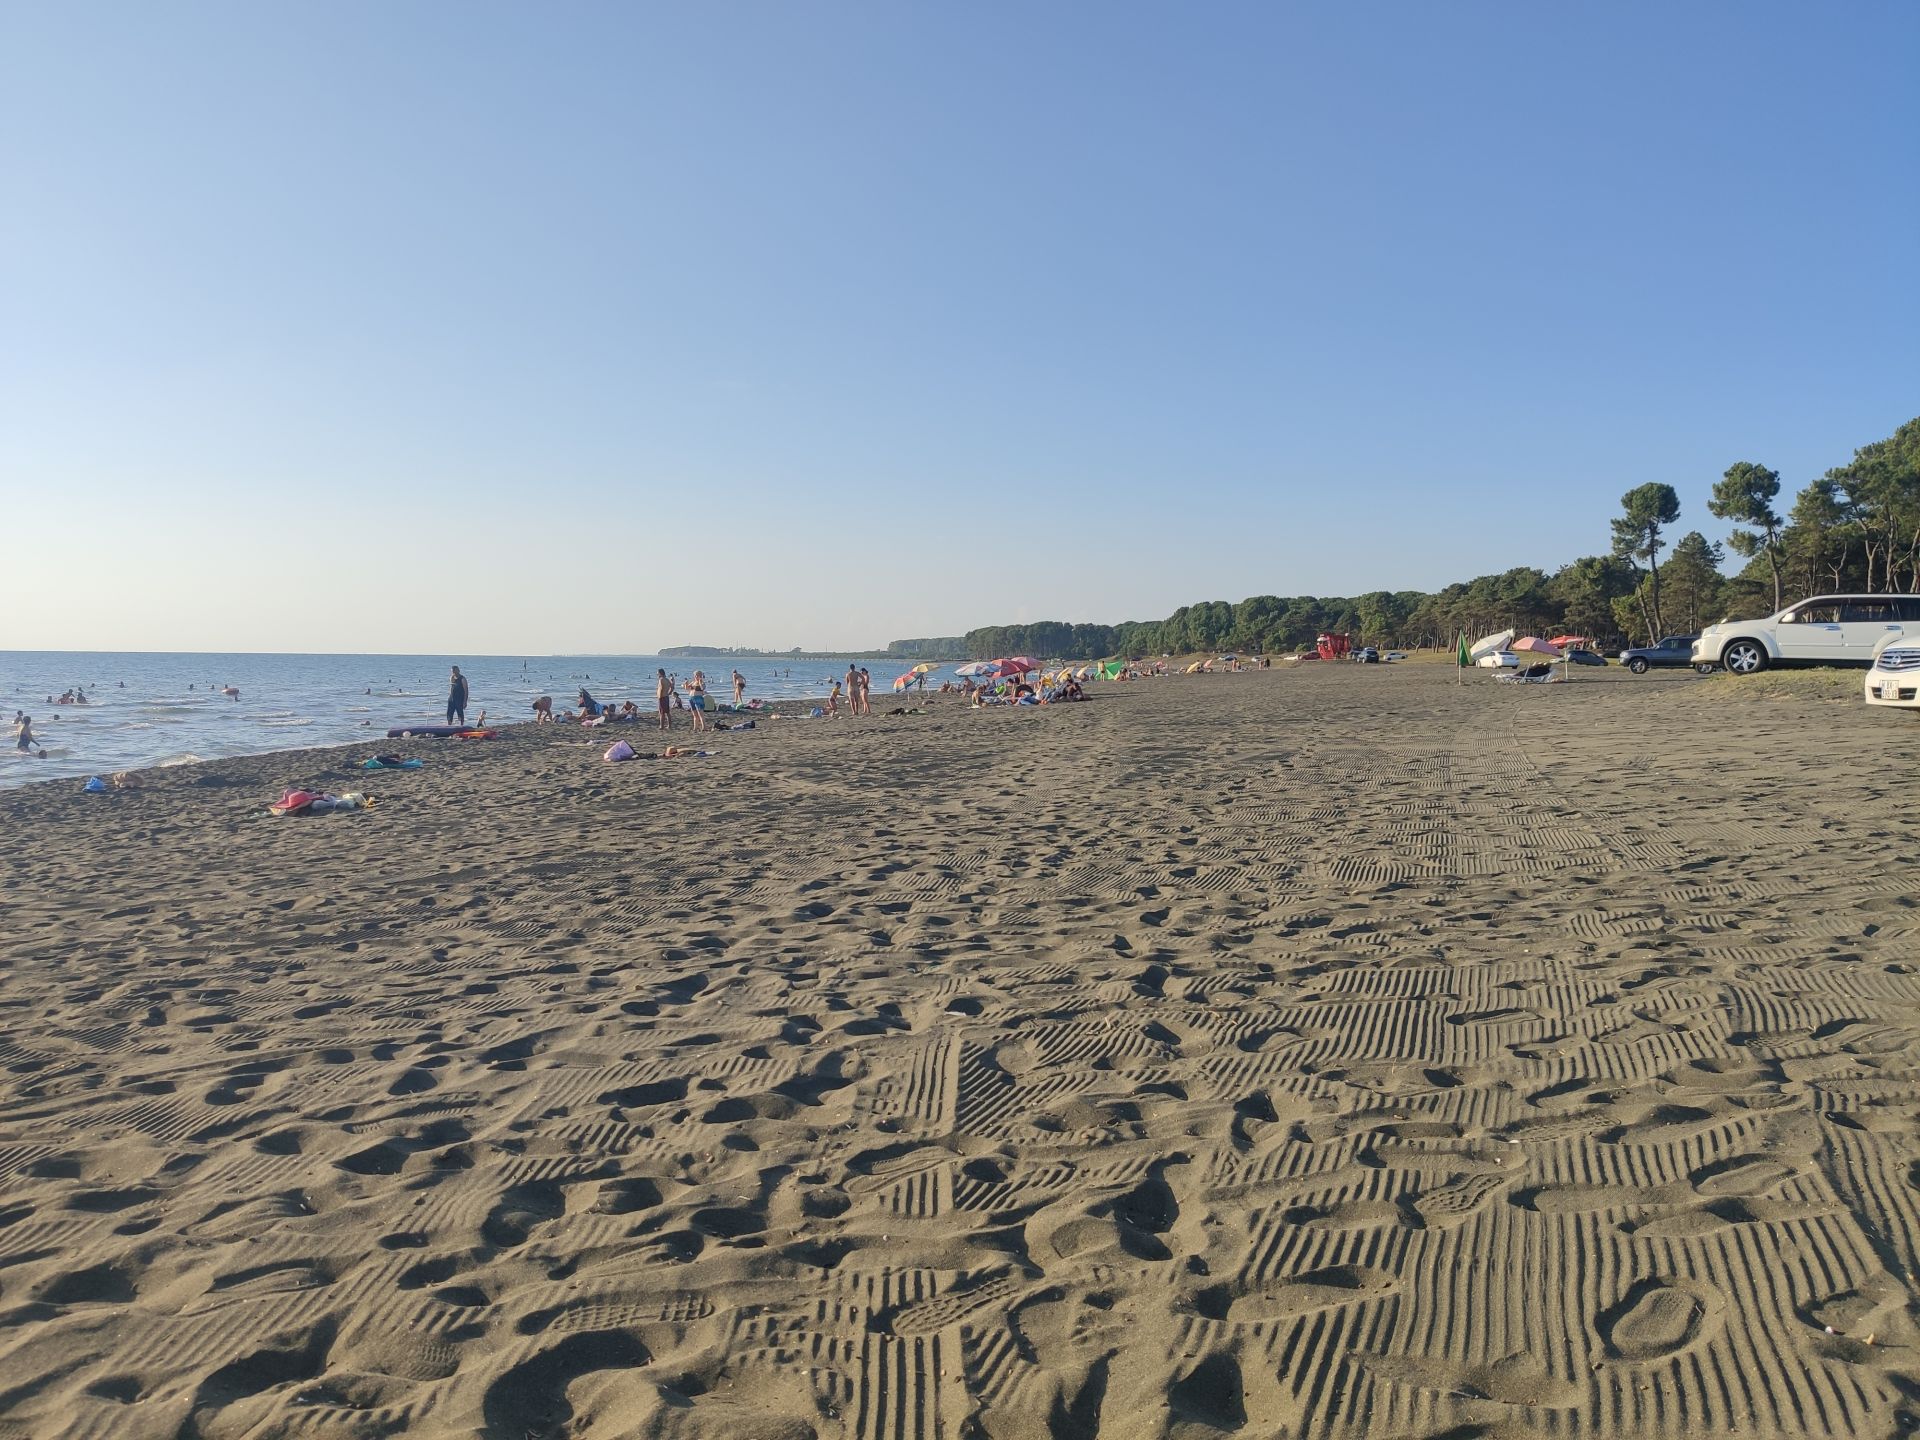 Fotografija Ureki Nature beach z črni pesek površino